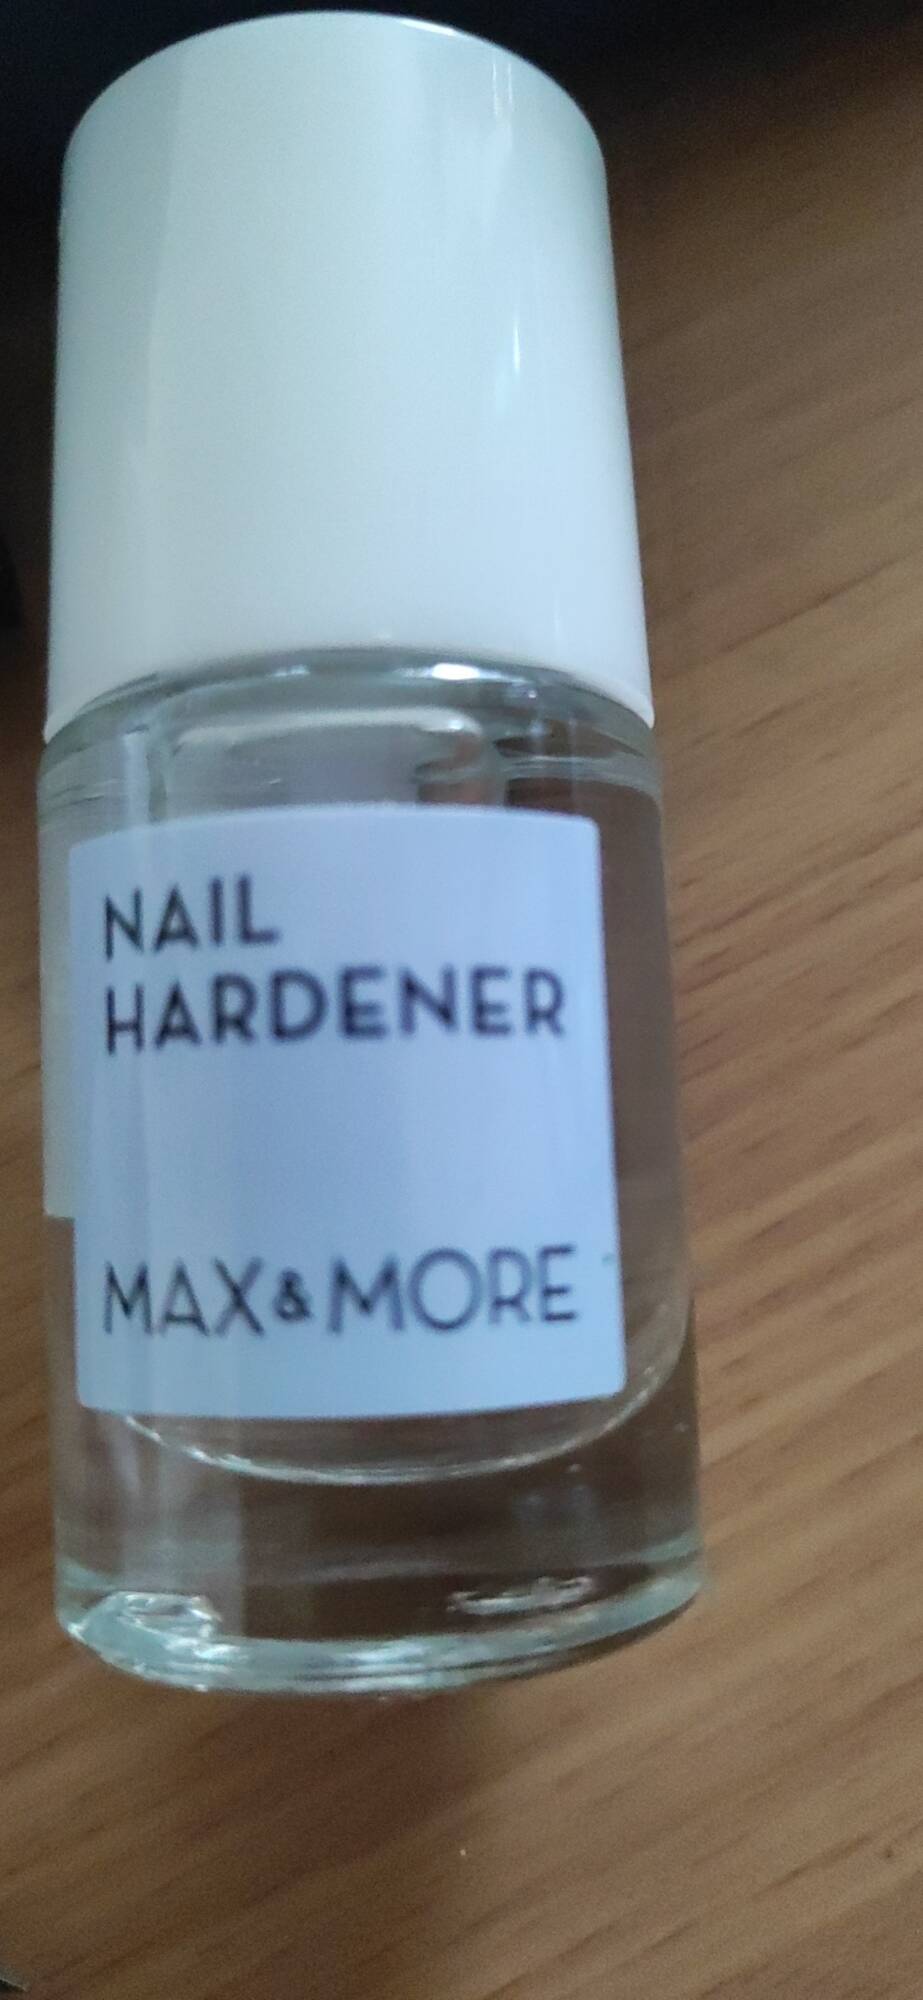 MAX & MORE - Nail hardener